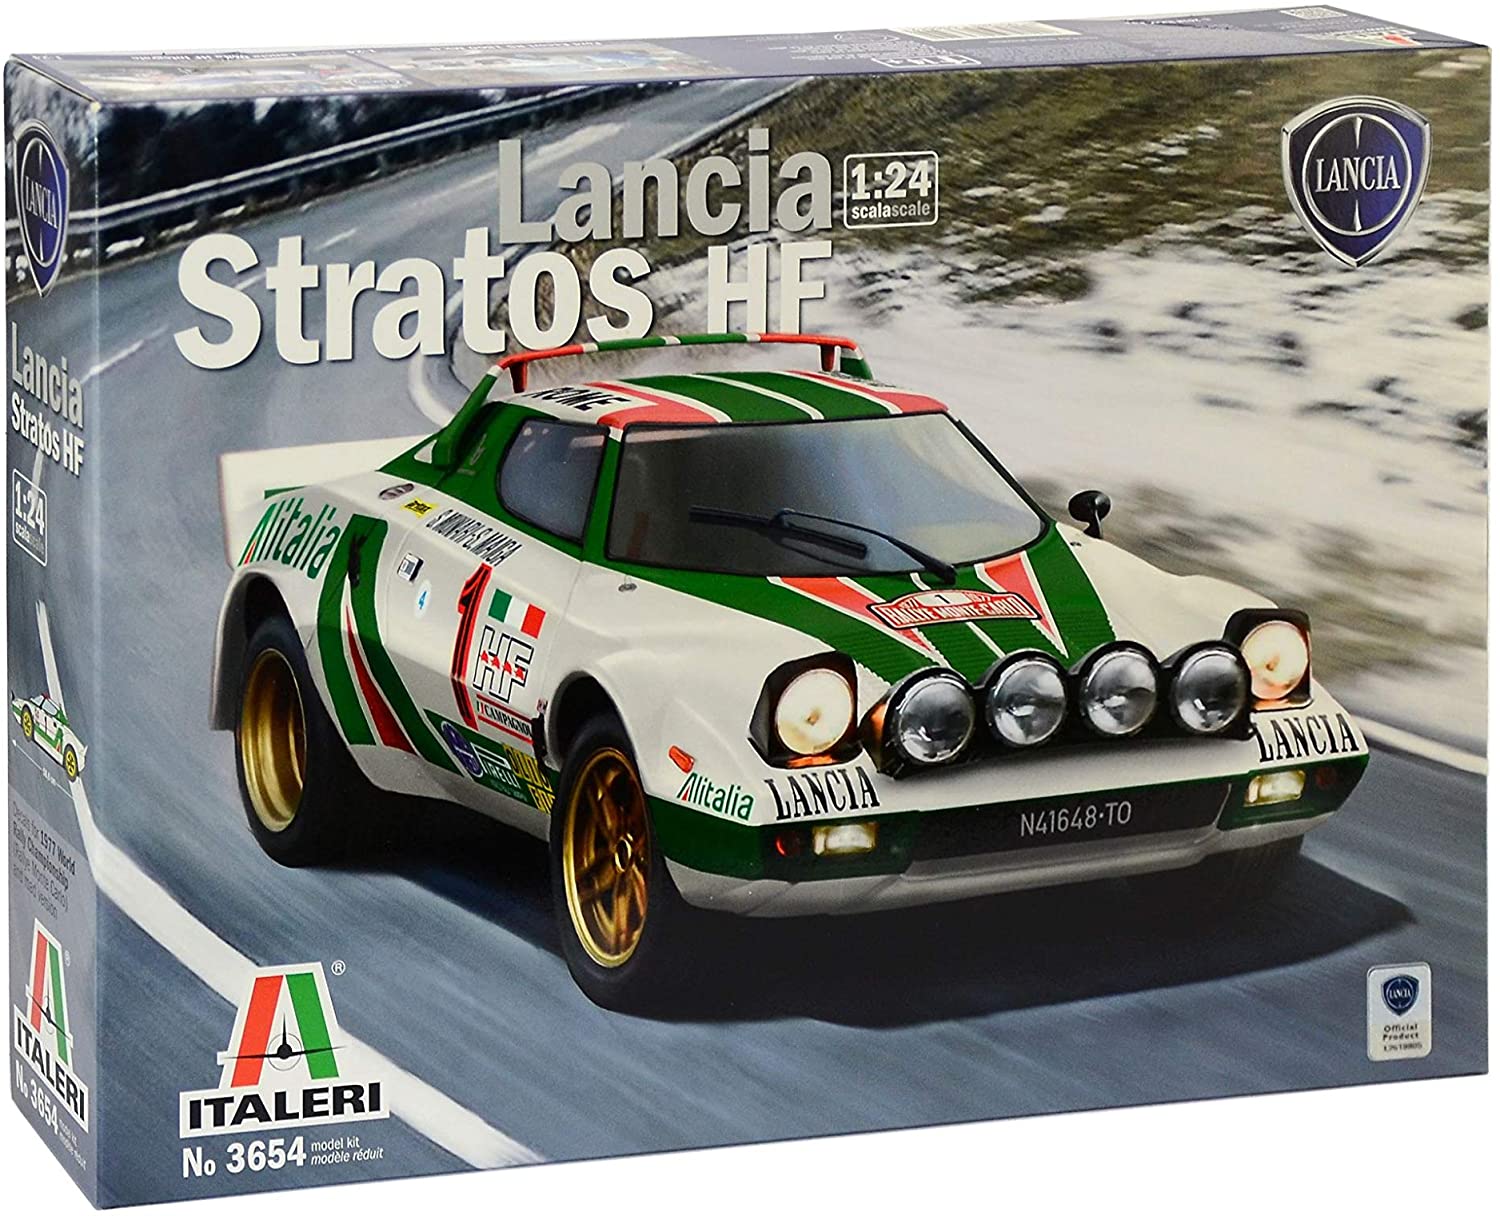 Italeri 3654 1: 24 Lancia Stratos Vehicle